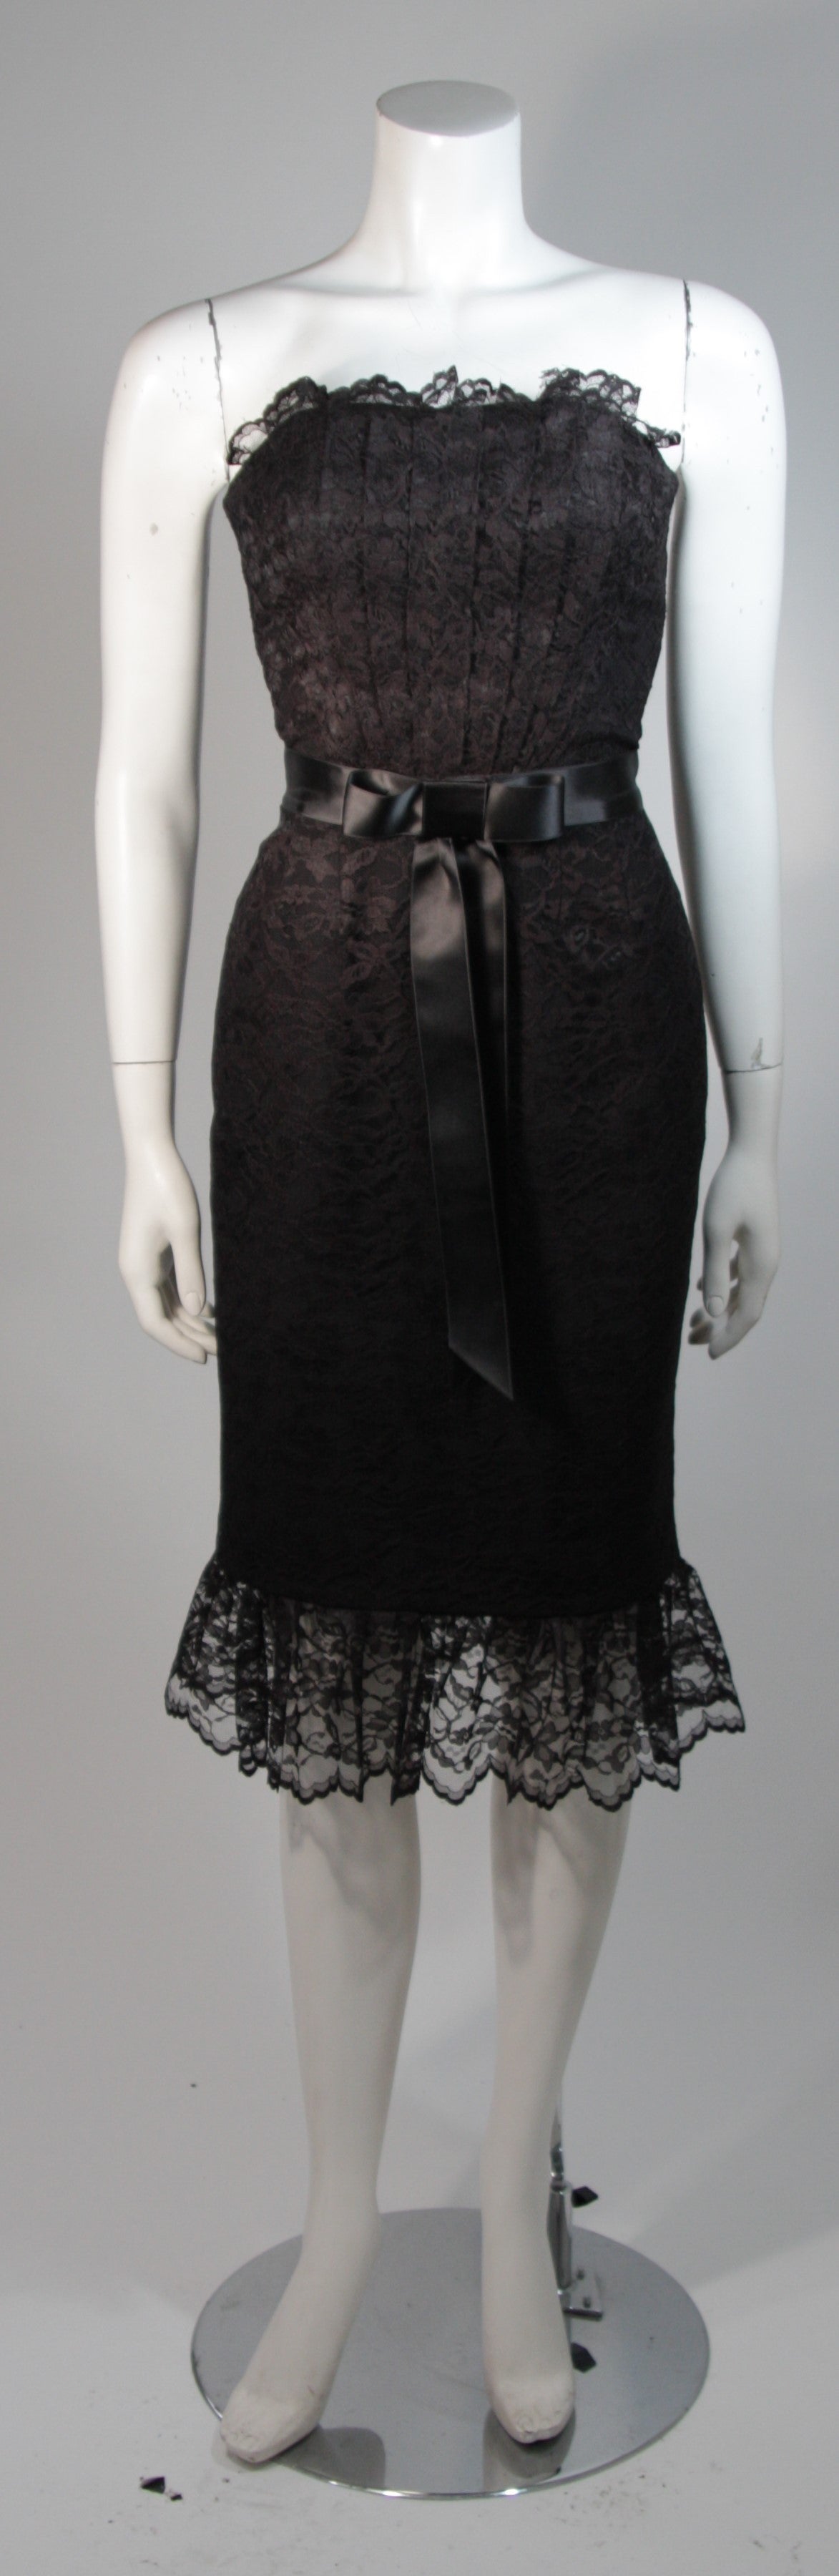 Noir Elizabeth Mason Couture - Robe en dentelle convertible en robe de cocktail, faite sur commande en vente